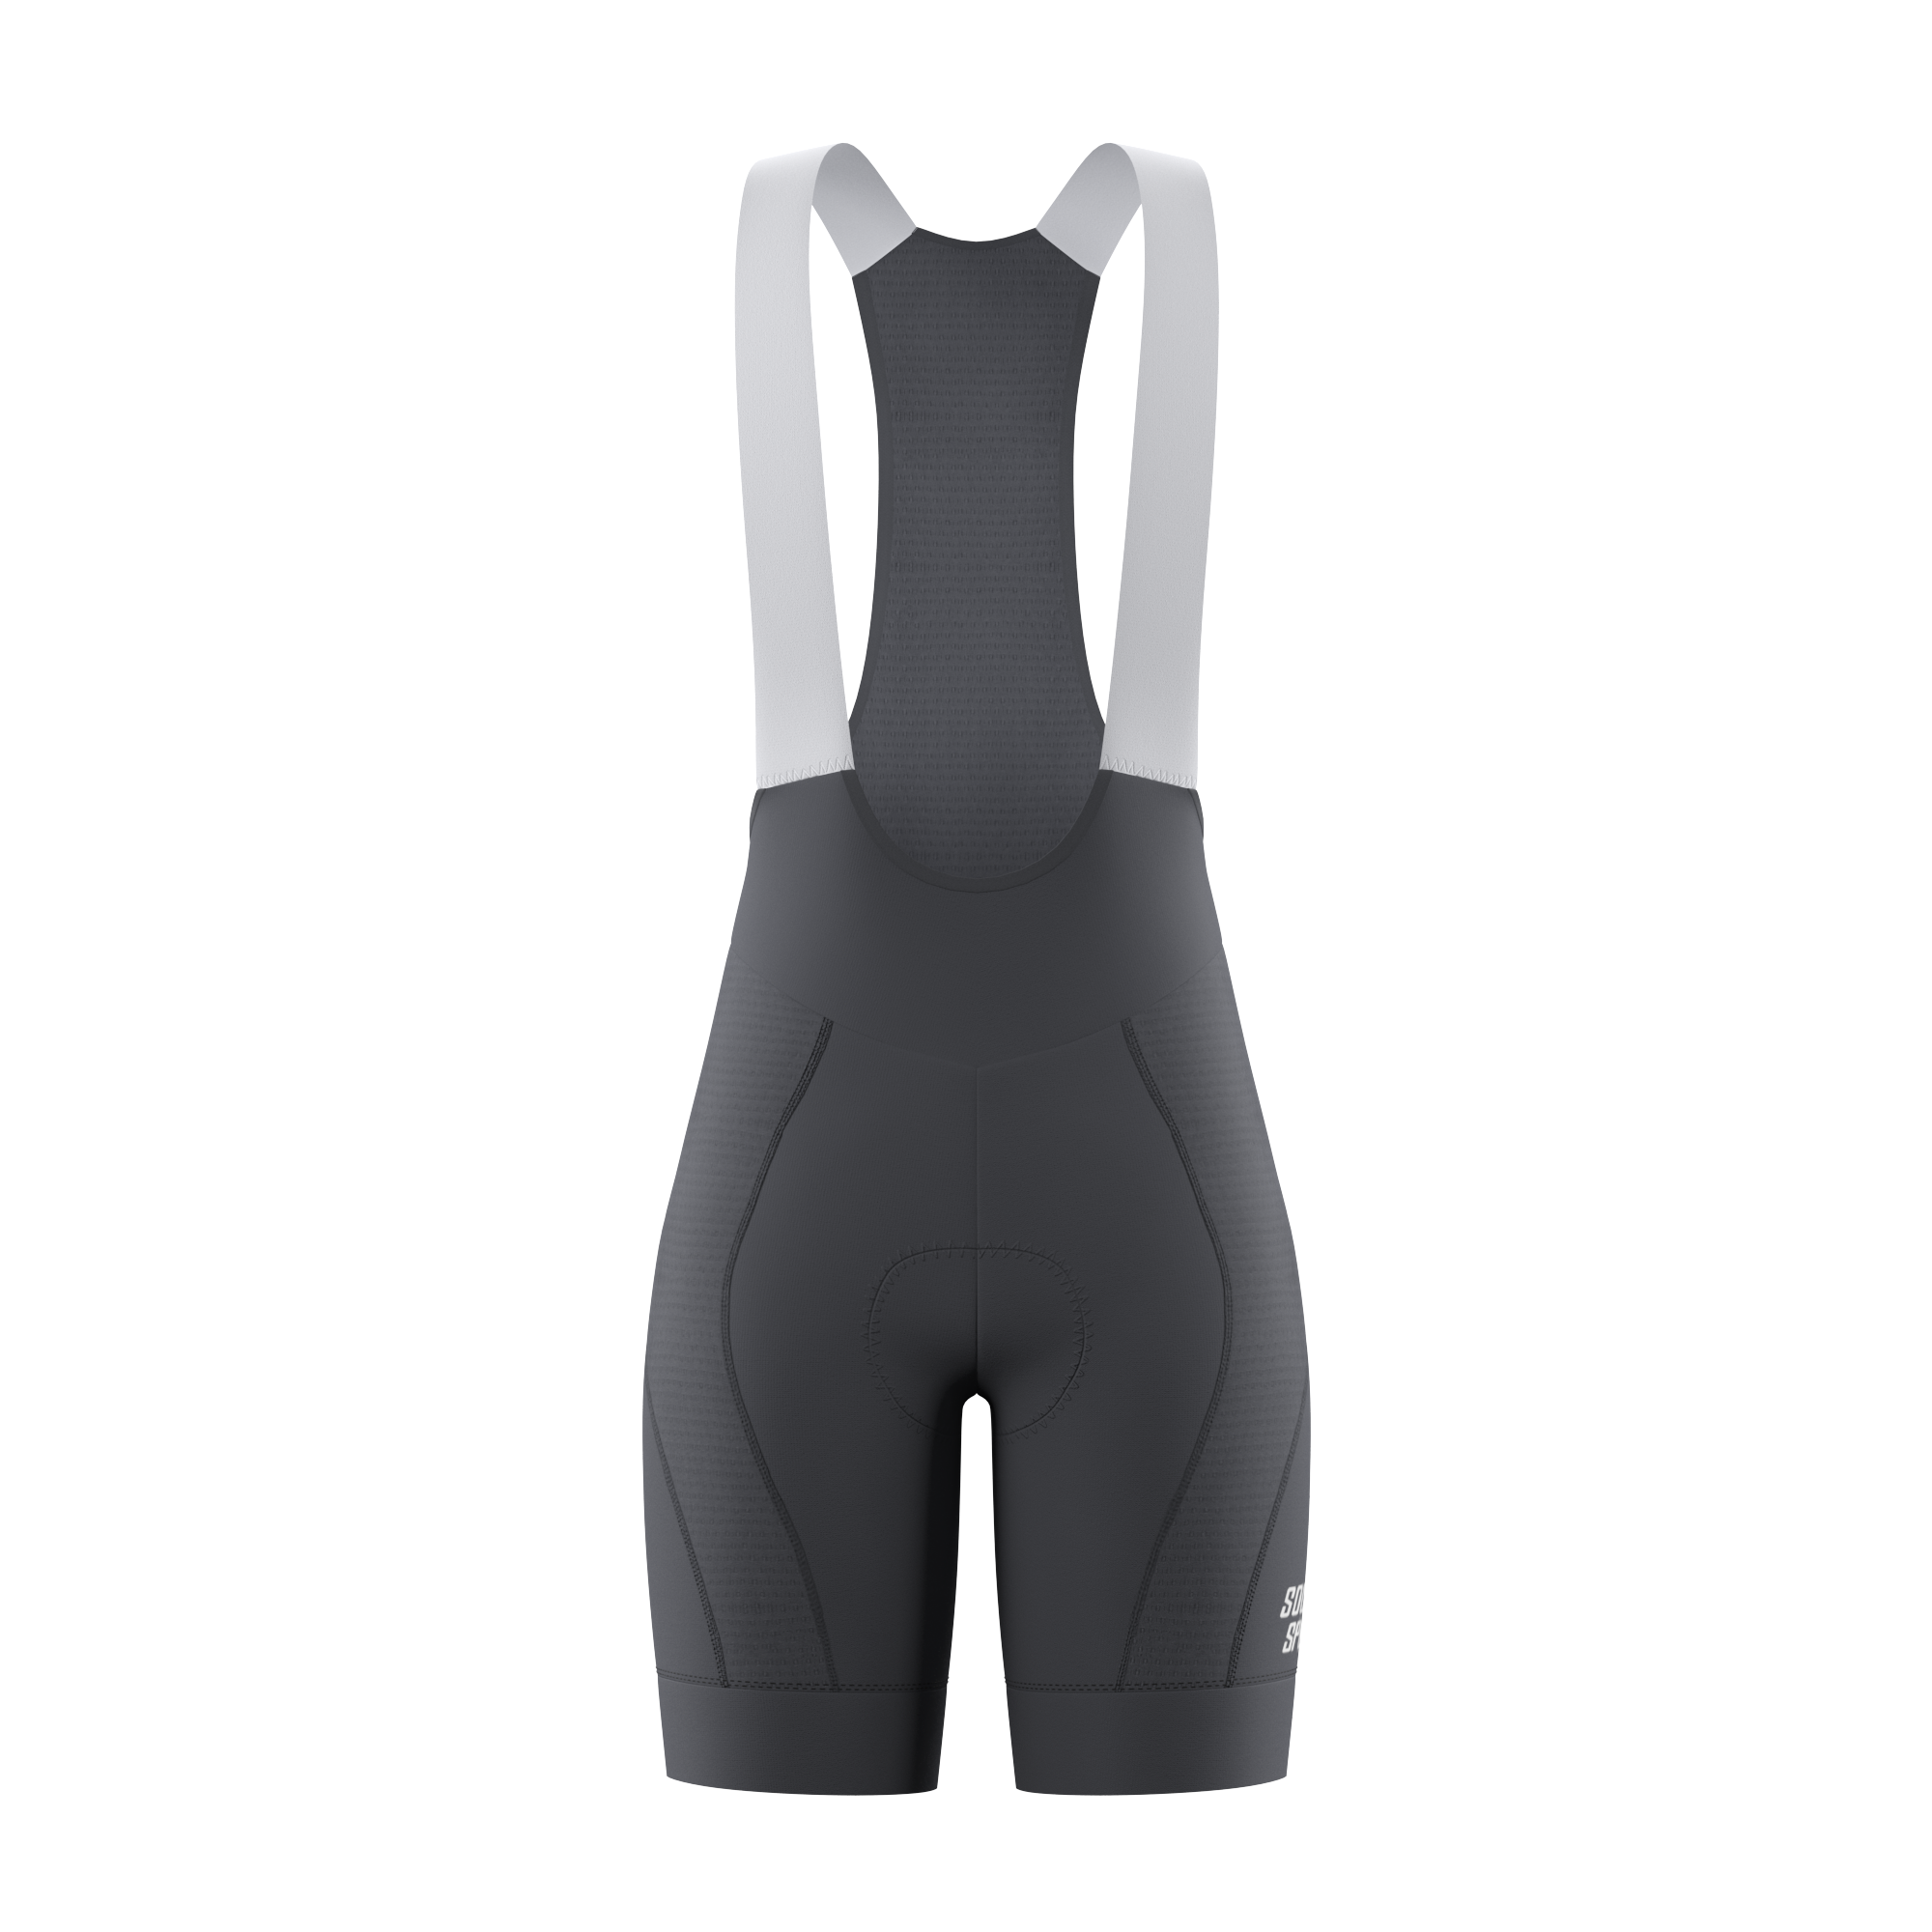 Unisex Padded Cycling Bib Shorts BS1606 -Grey